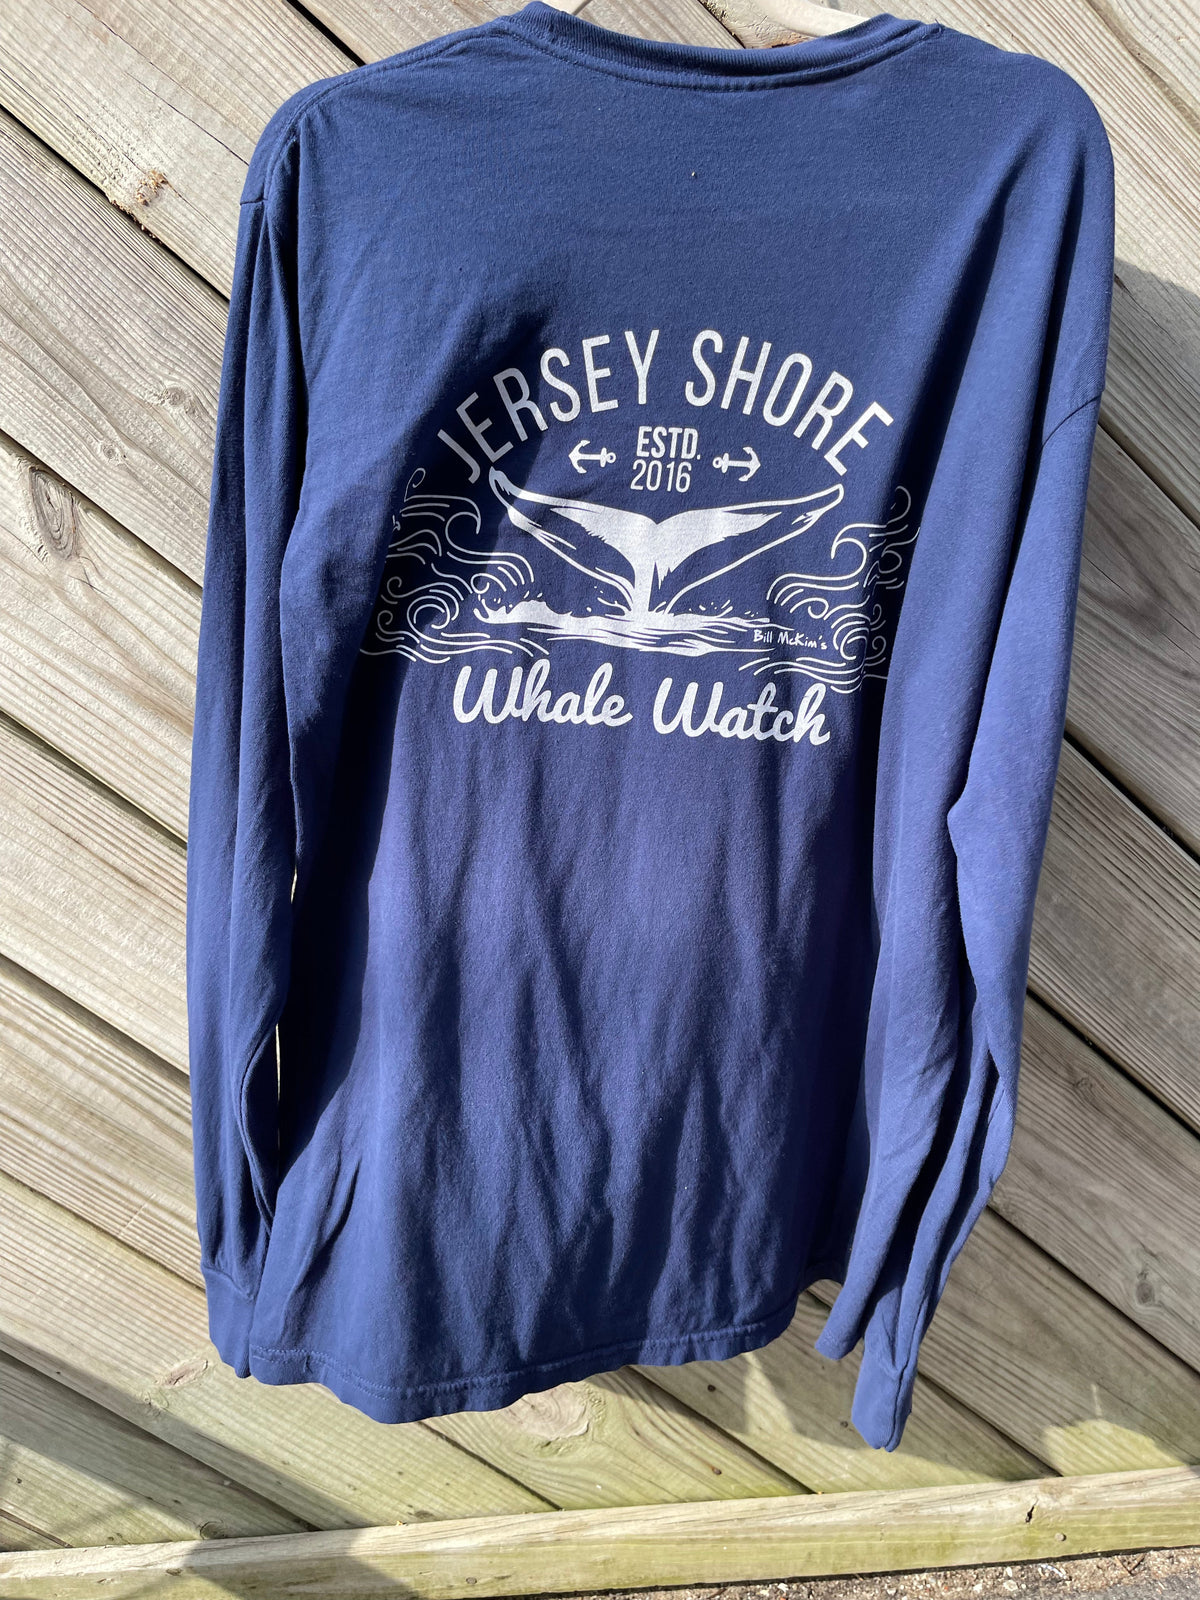 Jersey Shore Whale Watch Tshirt Amazing Quality Preshrunk Bill McKim Photography 